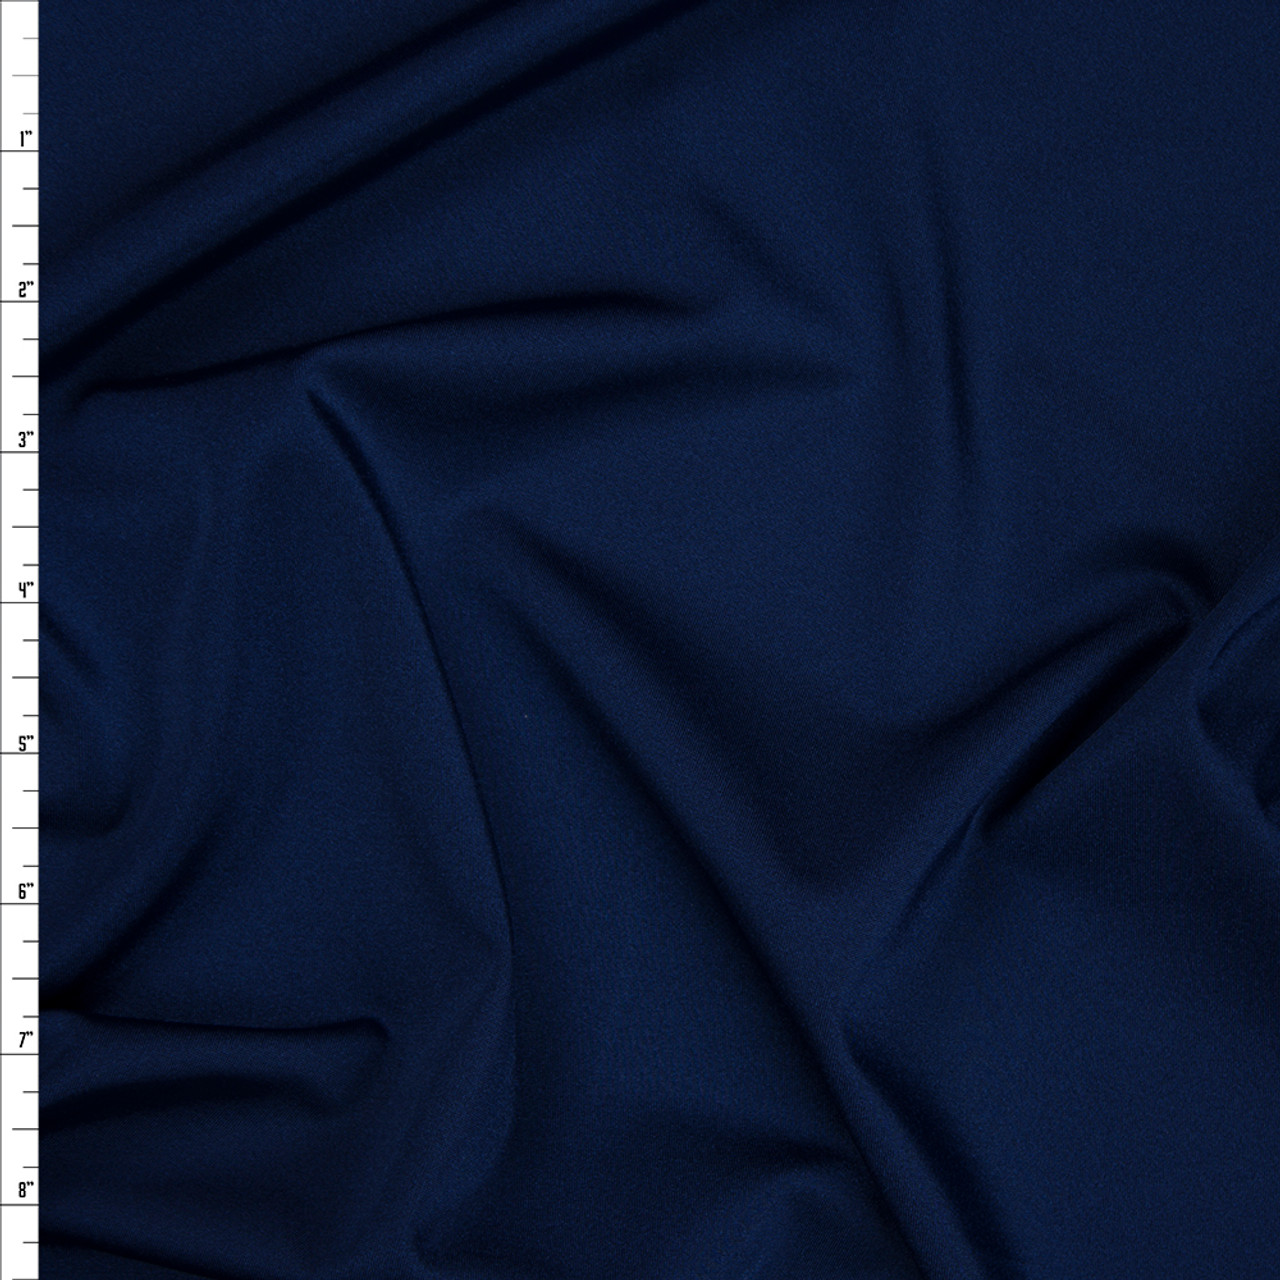 Jordan Navy Blue Shiny Nylon Spandex Fabric / 4 Way stretch